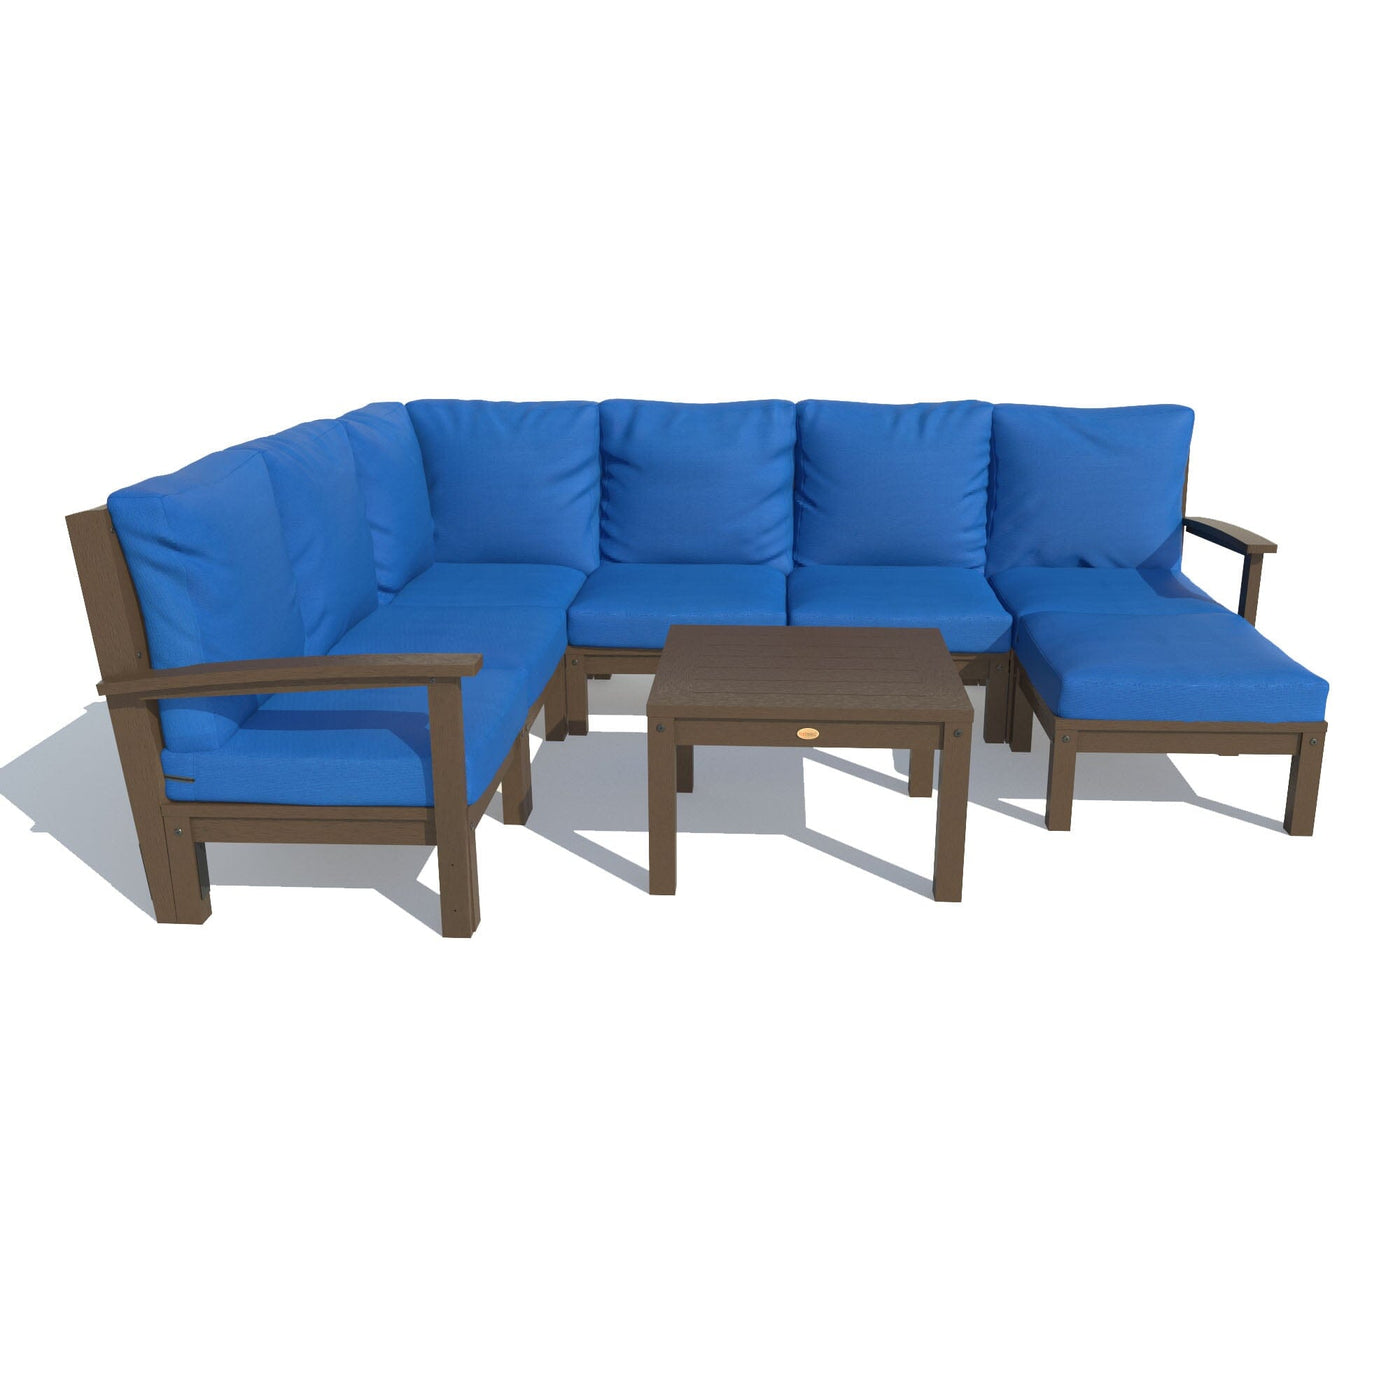 Bespoke Deep Seating: 8 Piece Sectional Sofa Set with Ottoman and Side Table Deep Seating Highwood USA Cobalt Blue Weathered Acorn 